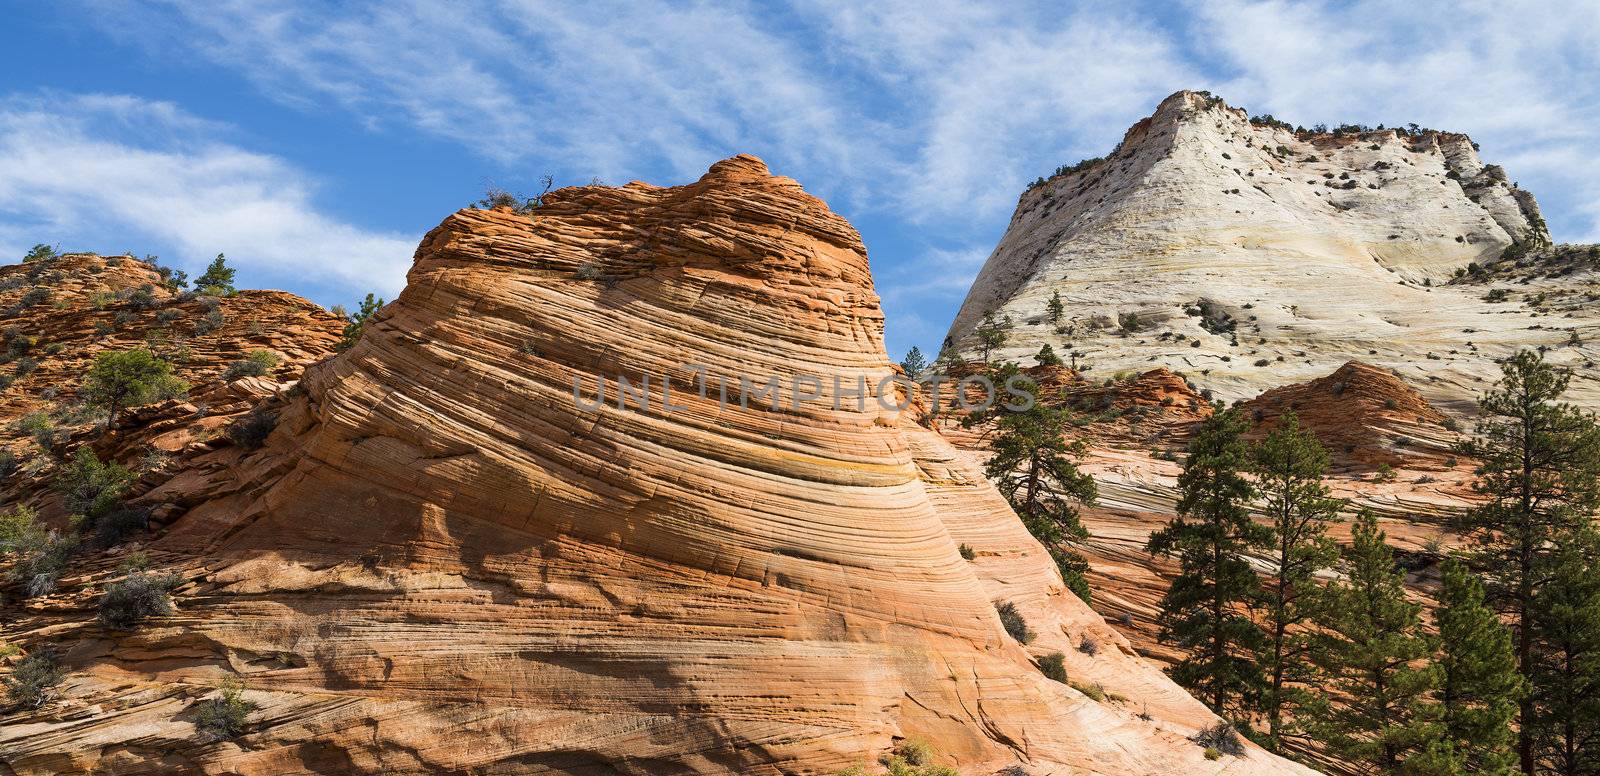 Zion National Park, USA. Scenic multicolored cliffs create an unforgettable landscape 